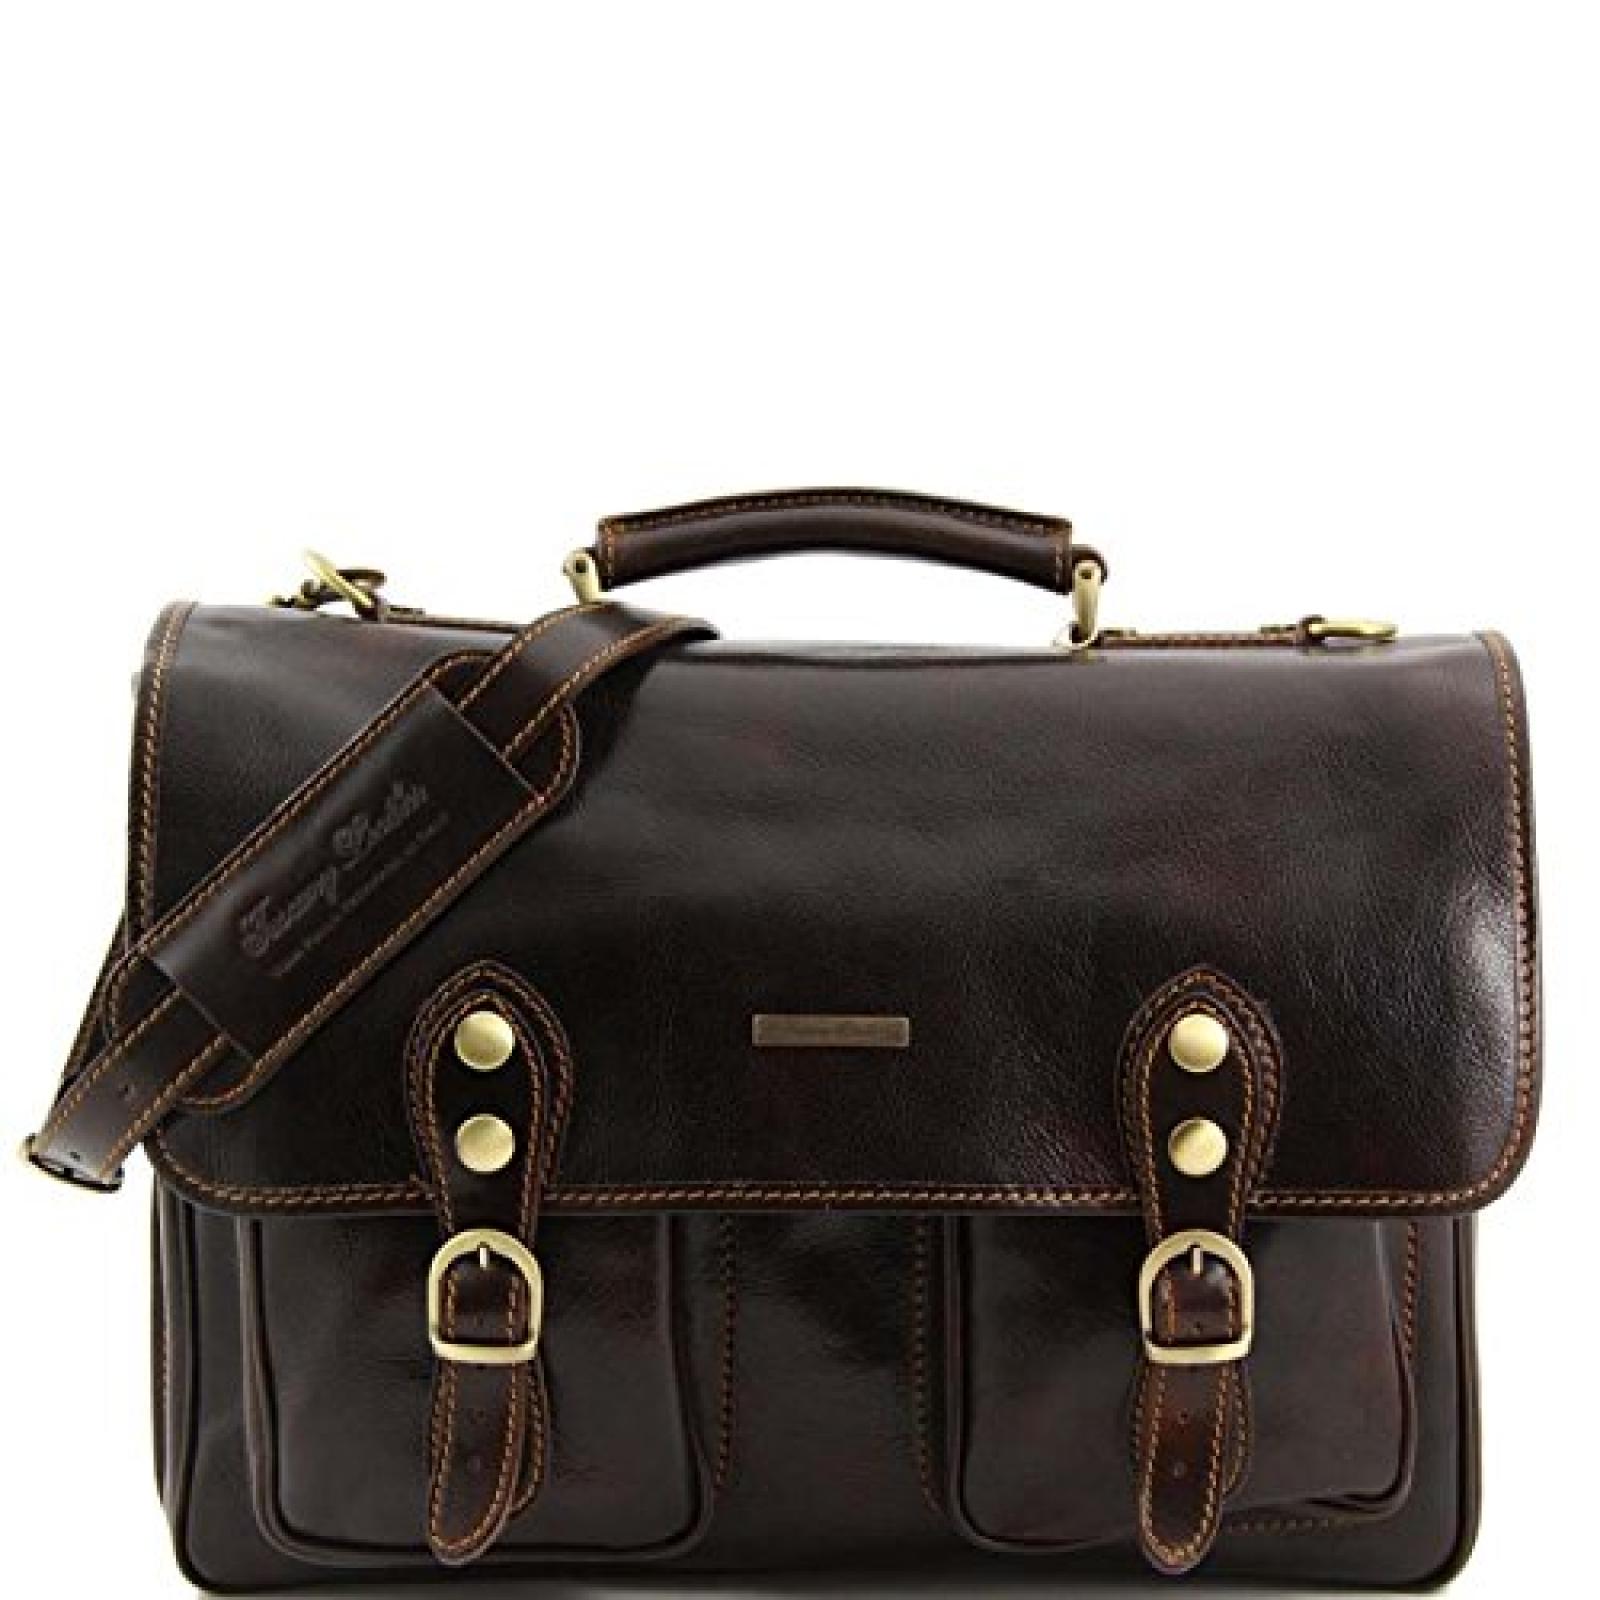 Tuscany Leather - Modena - Messenger Tasche aus Leder 2 Fächer Dunkelbraun - TL141134/5 